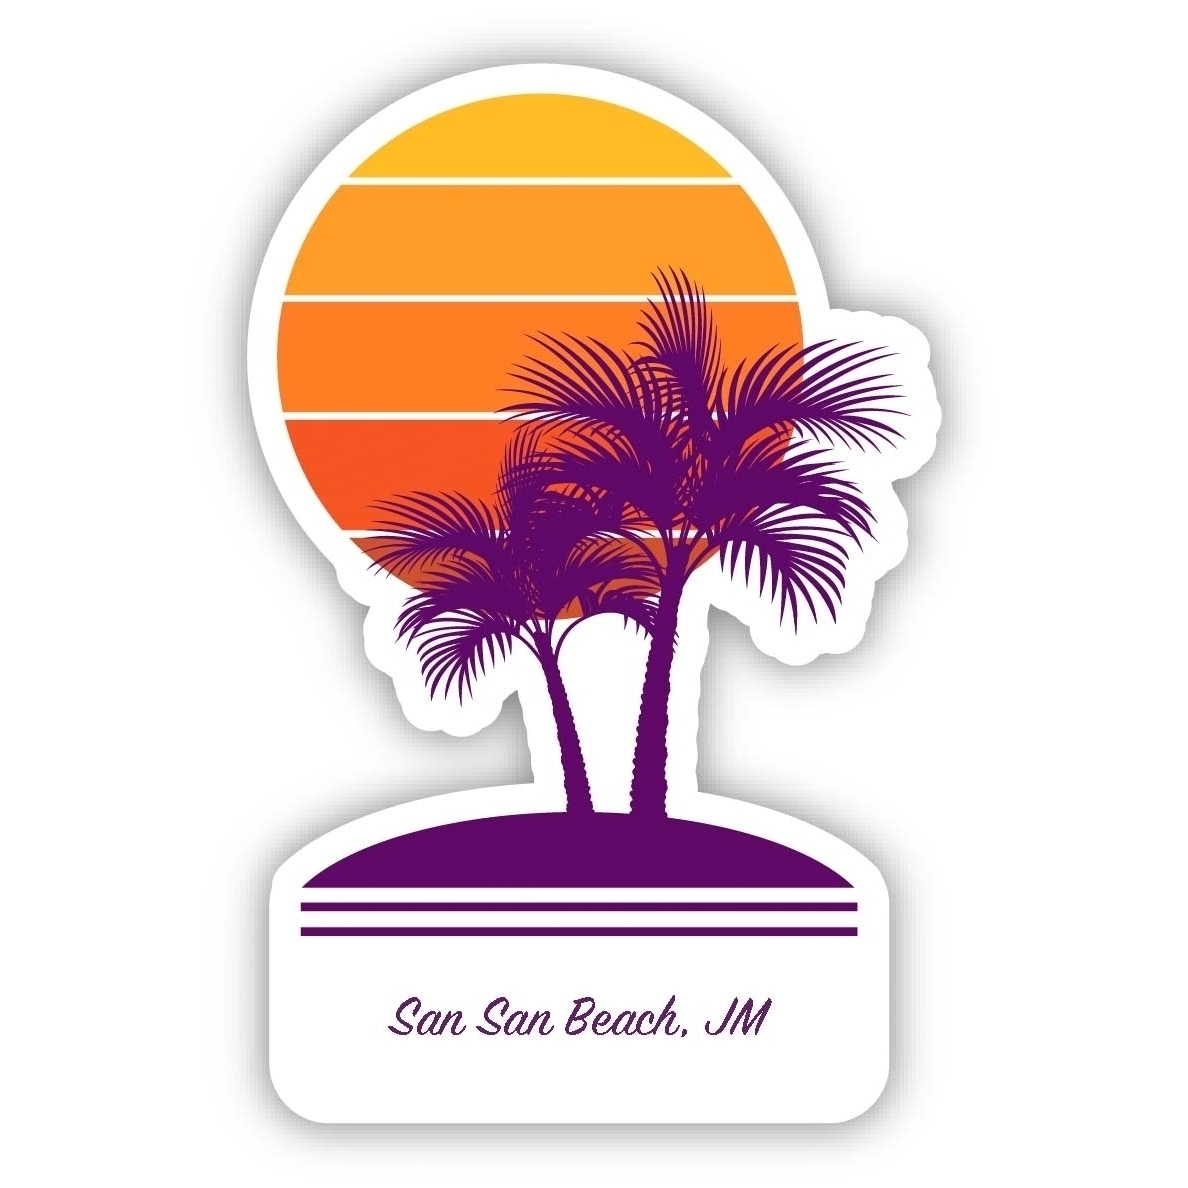 San San Beach Jamaica Souvenir 4 Inch Vinyl Decal Sticker Palm Design